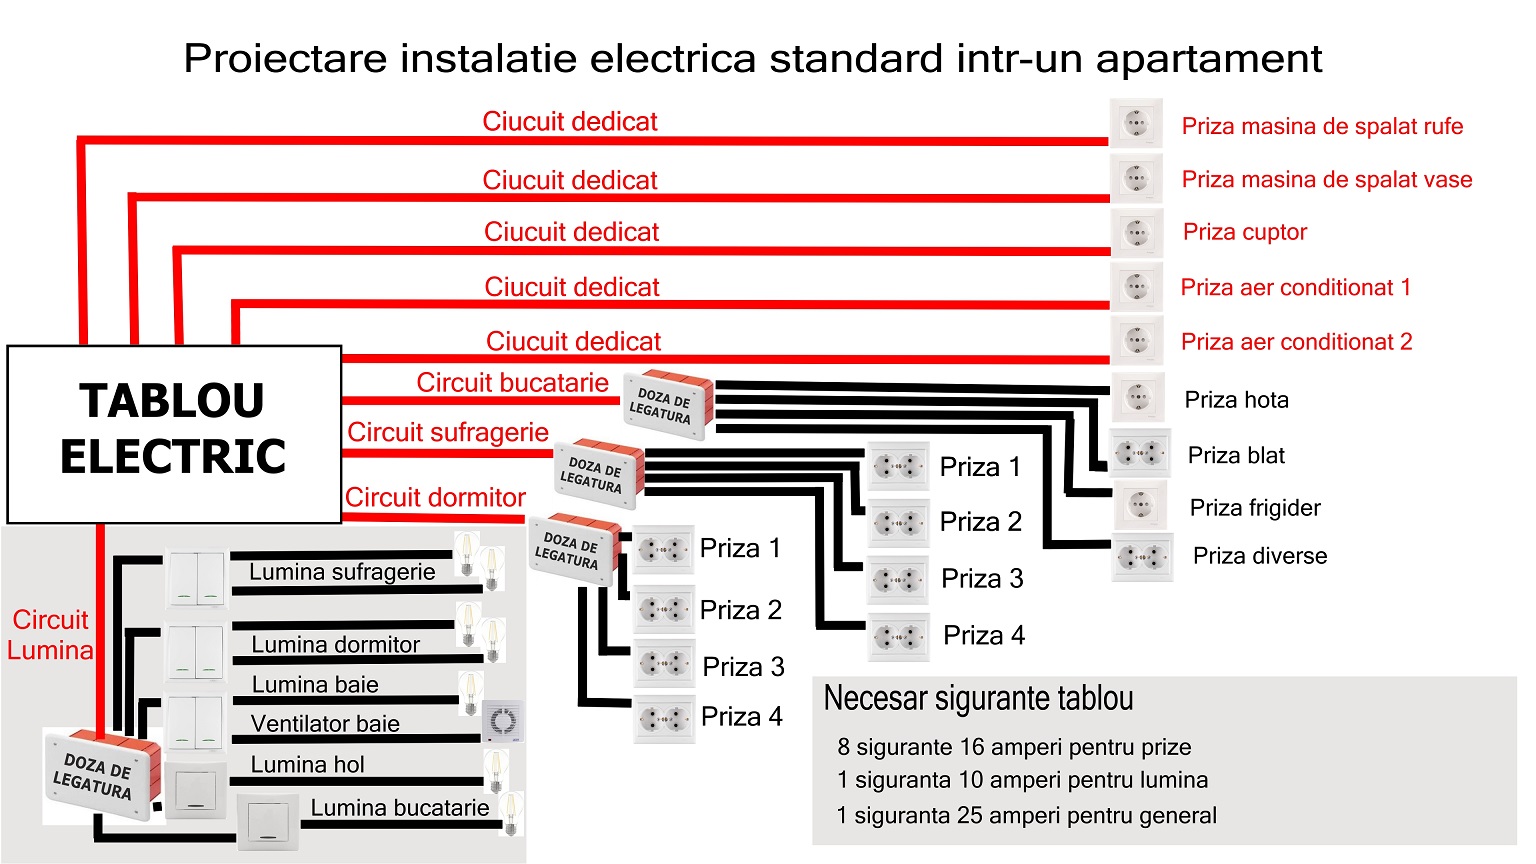 Negotiate Sturdy commitment Instalatie electrica intr-un apartament de 2 camere